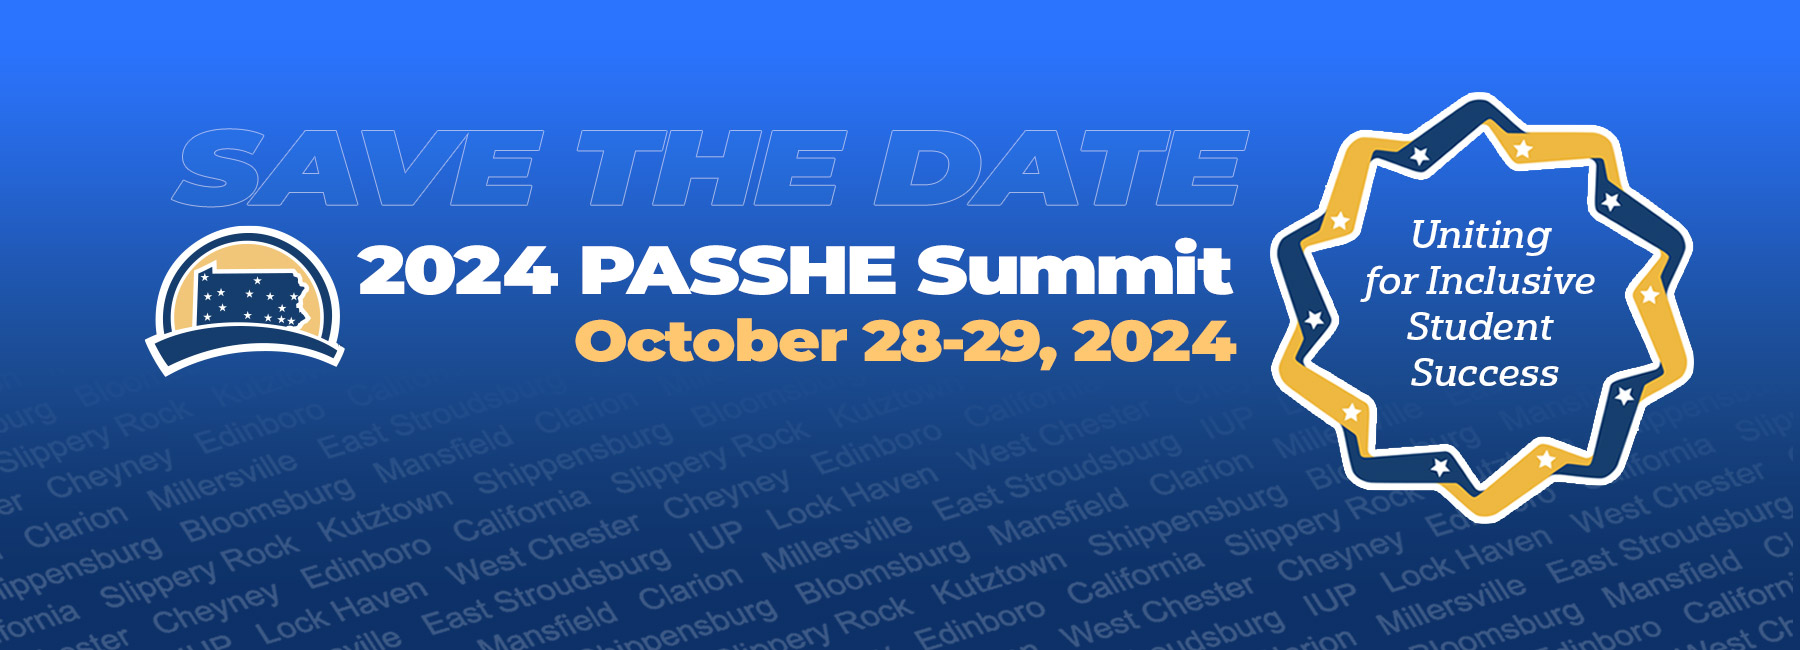 2024 PASSHE Summit banner graphic